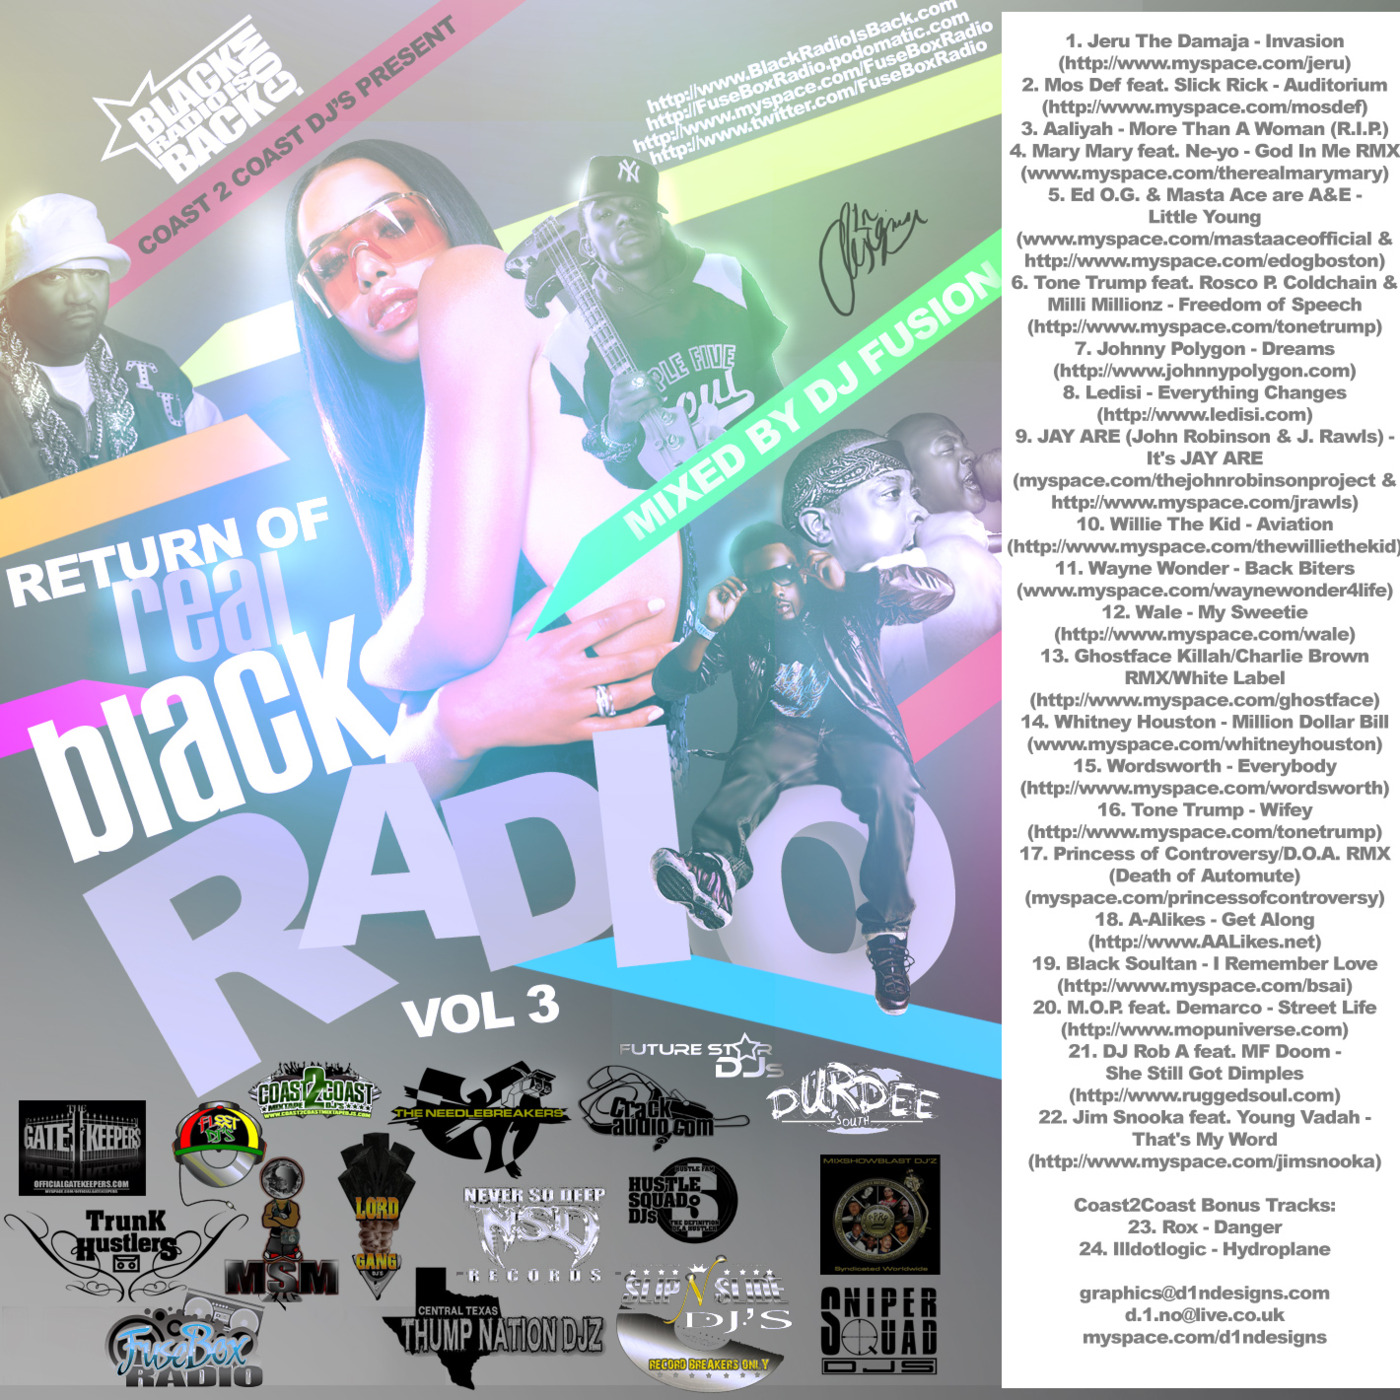 FuseBox Radio #516: Return of Real Black Radio Vol. 3 by DJ Fusion [FLASHBACK EPISODE: Week of Feb. 22, 2017]